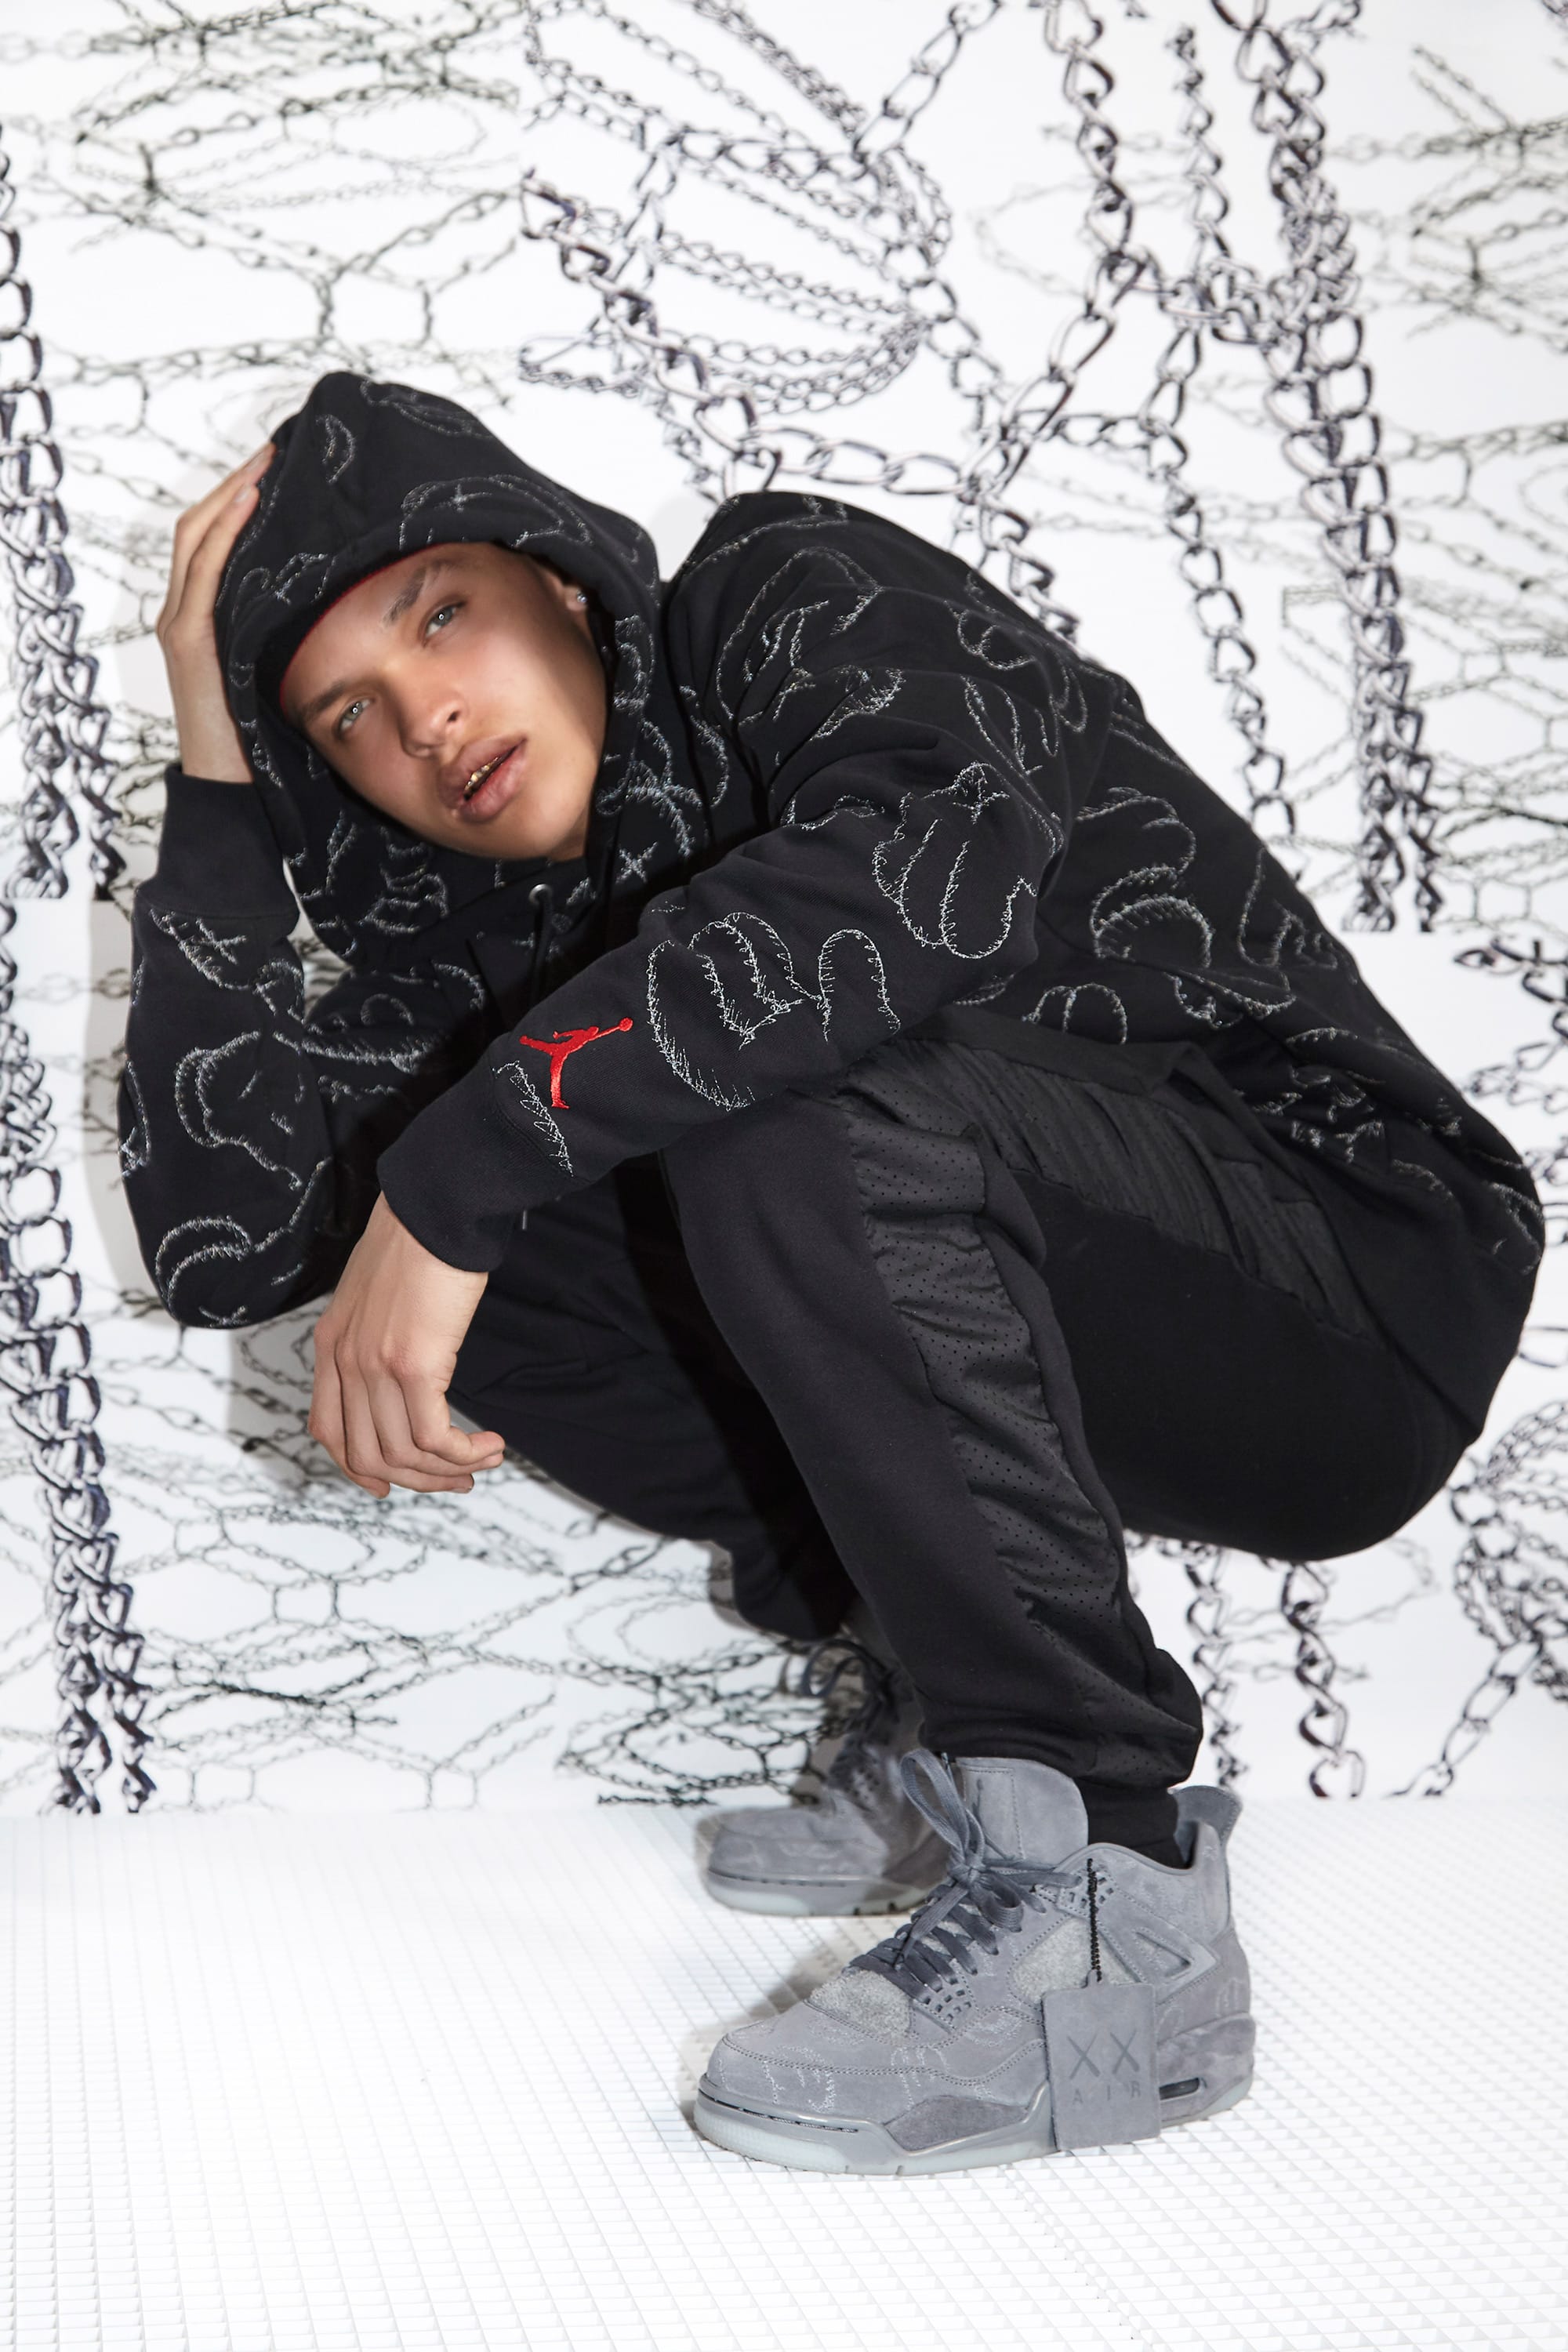 Jordan Brand x KAWS Collection Release 